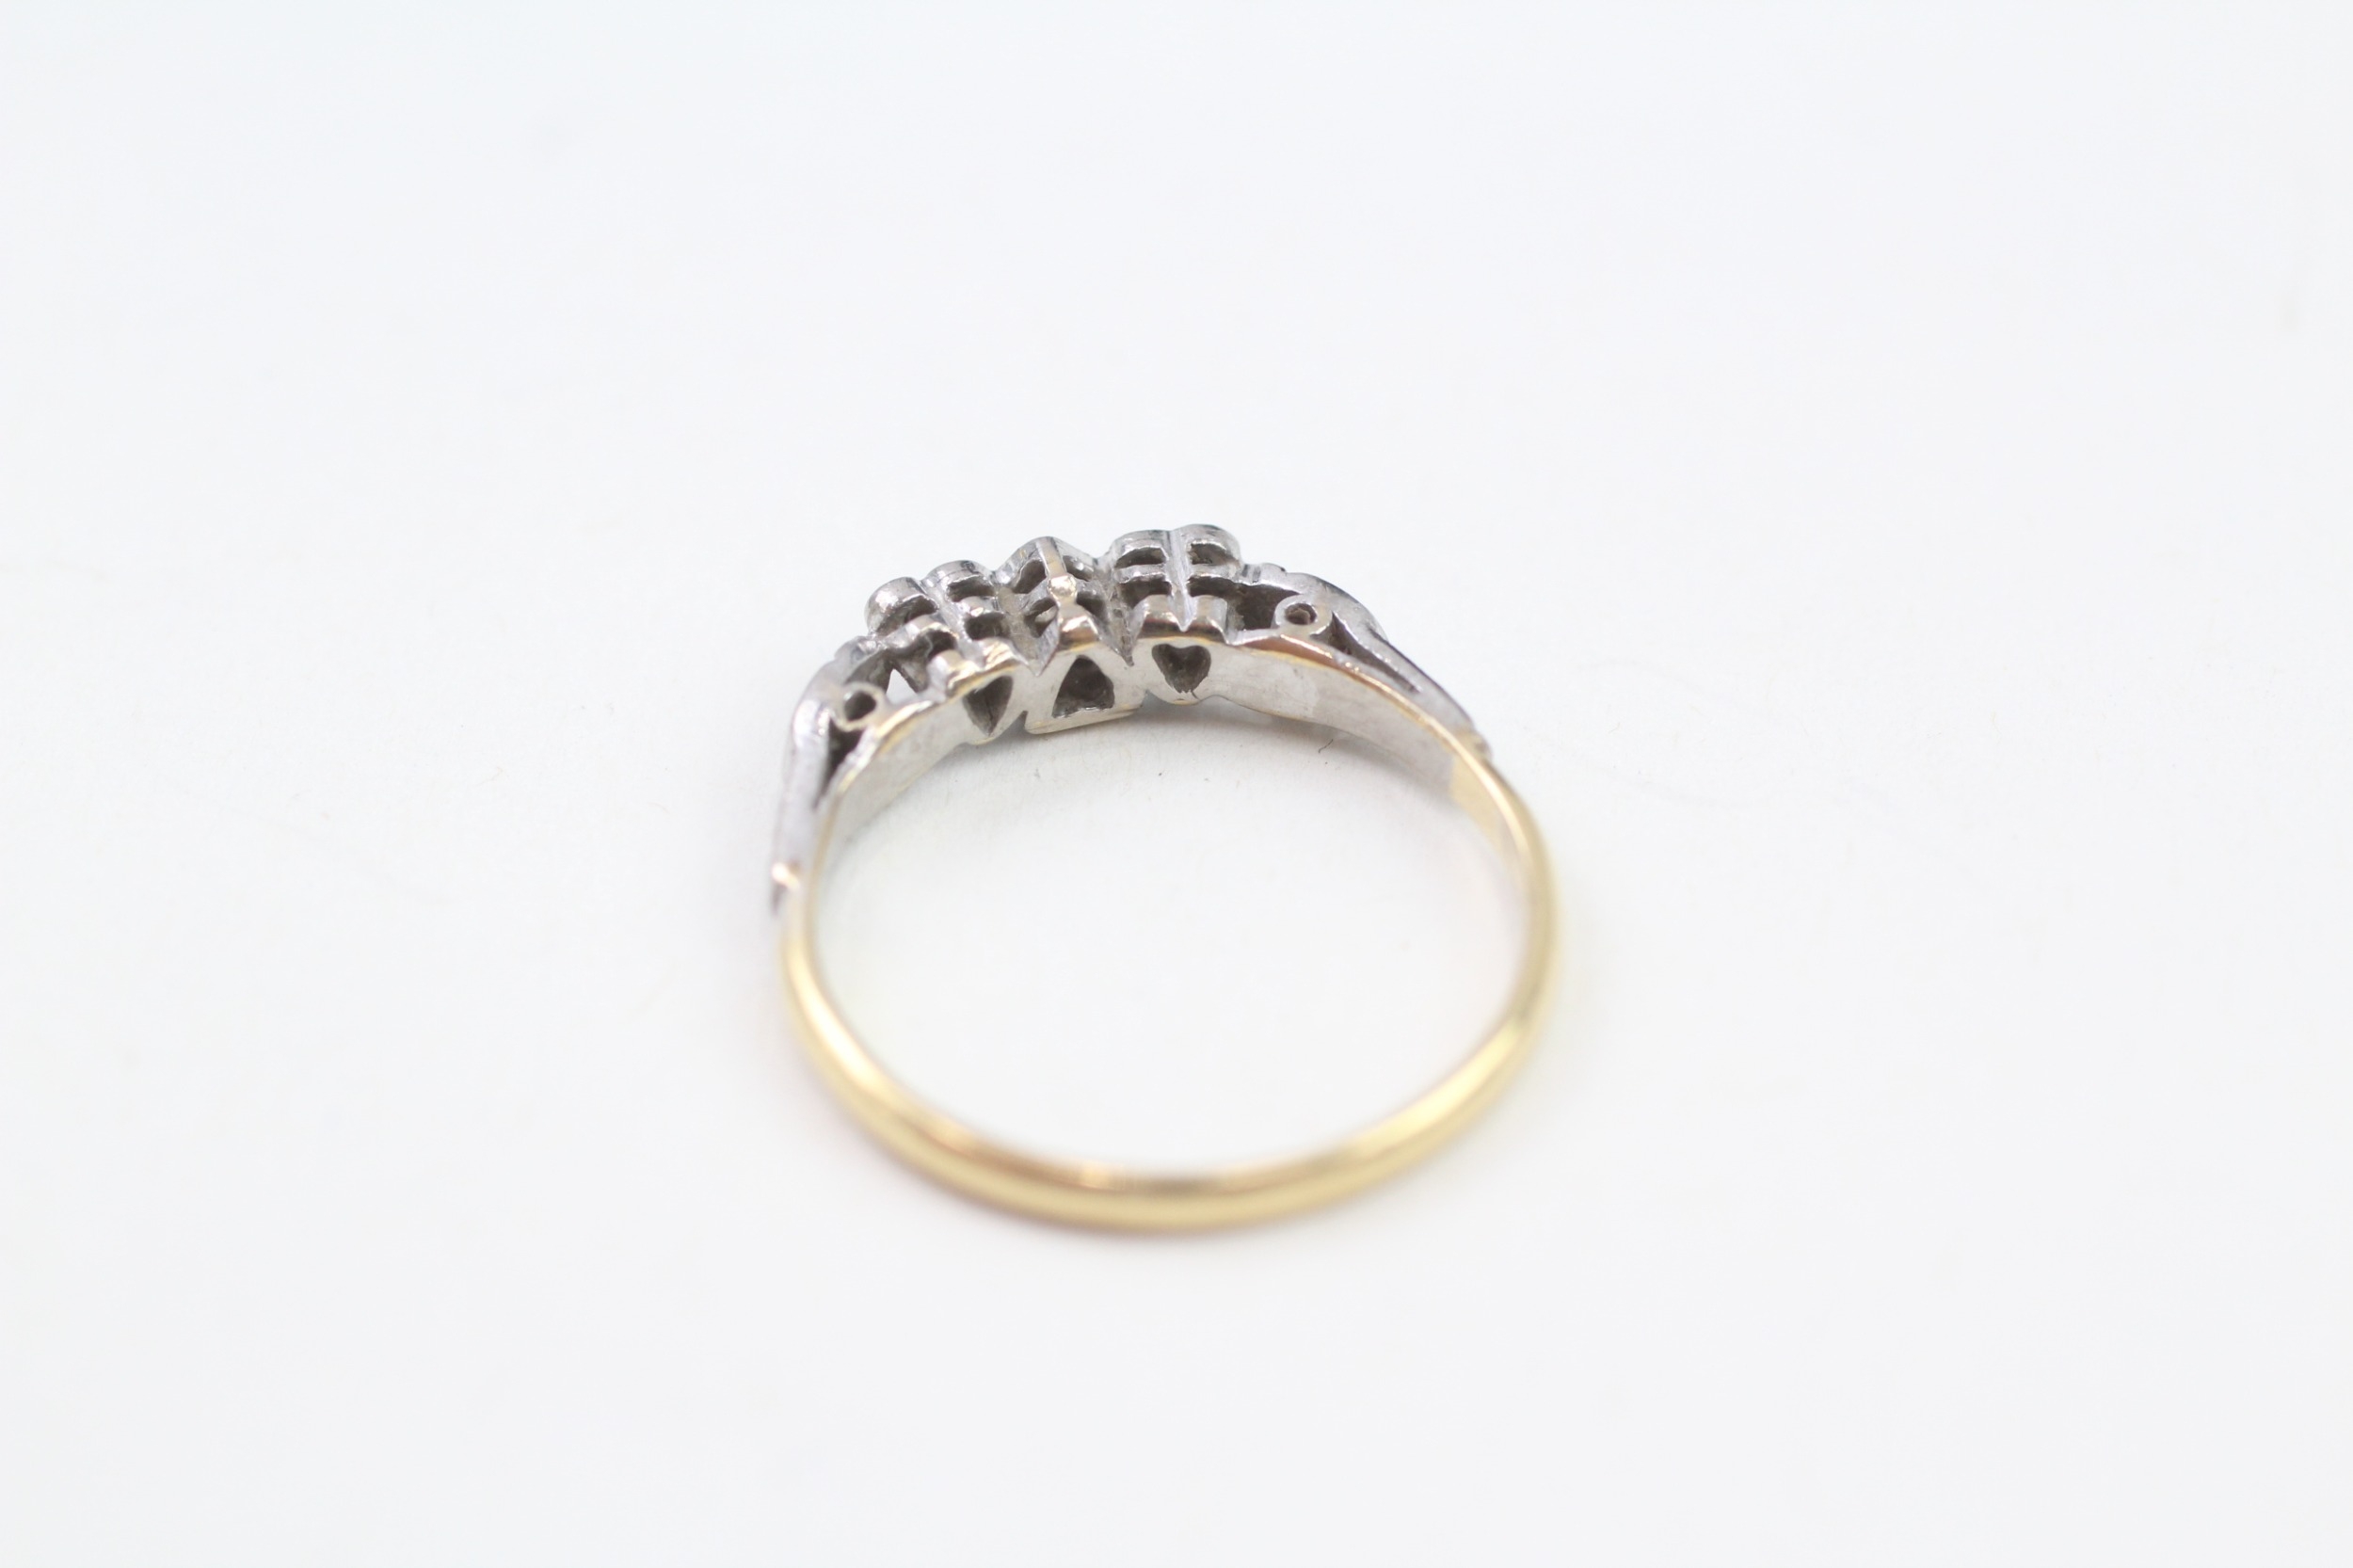 18ct gold vintage diamond heart shaped three stone ring (2g) - Image 4 of 4